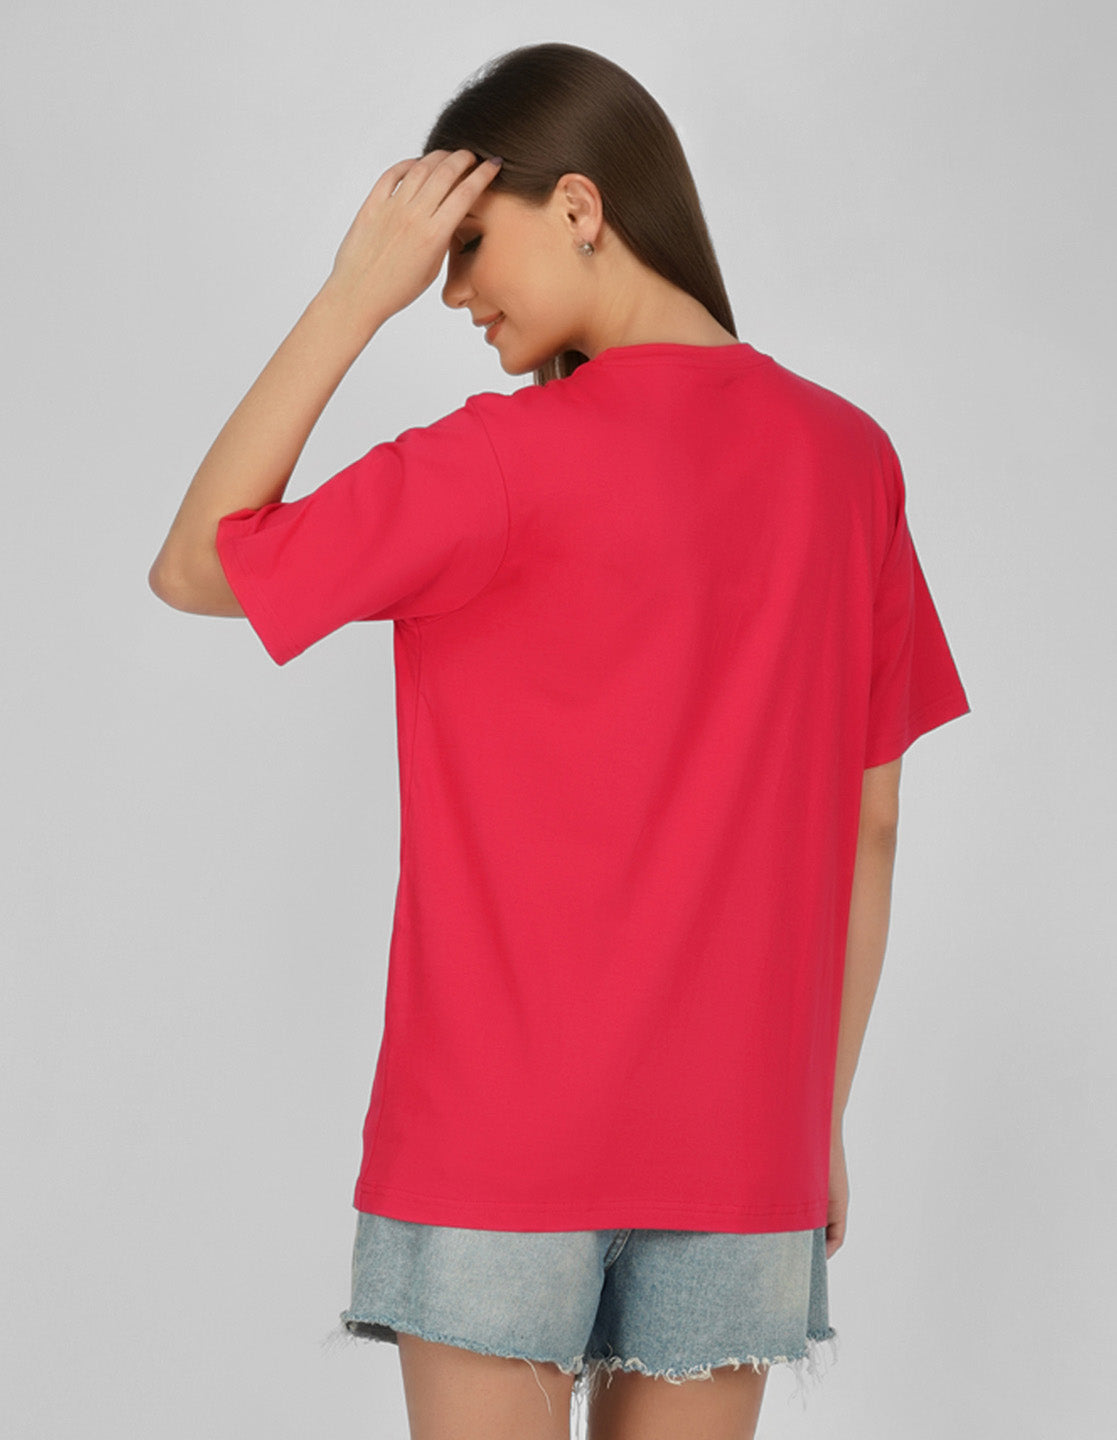 Nusyl Women Hot Pink Basic print oversized t-shirt